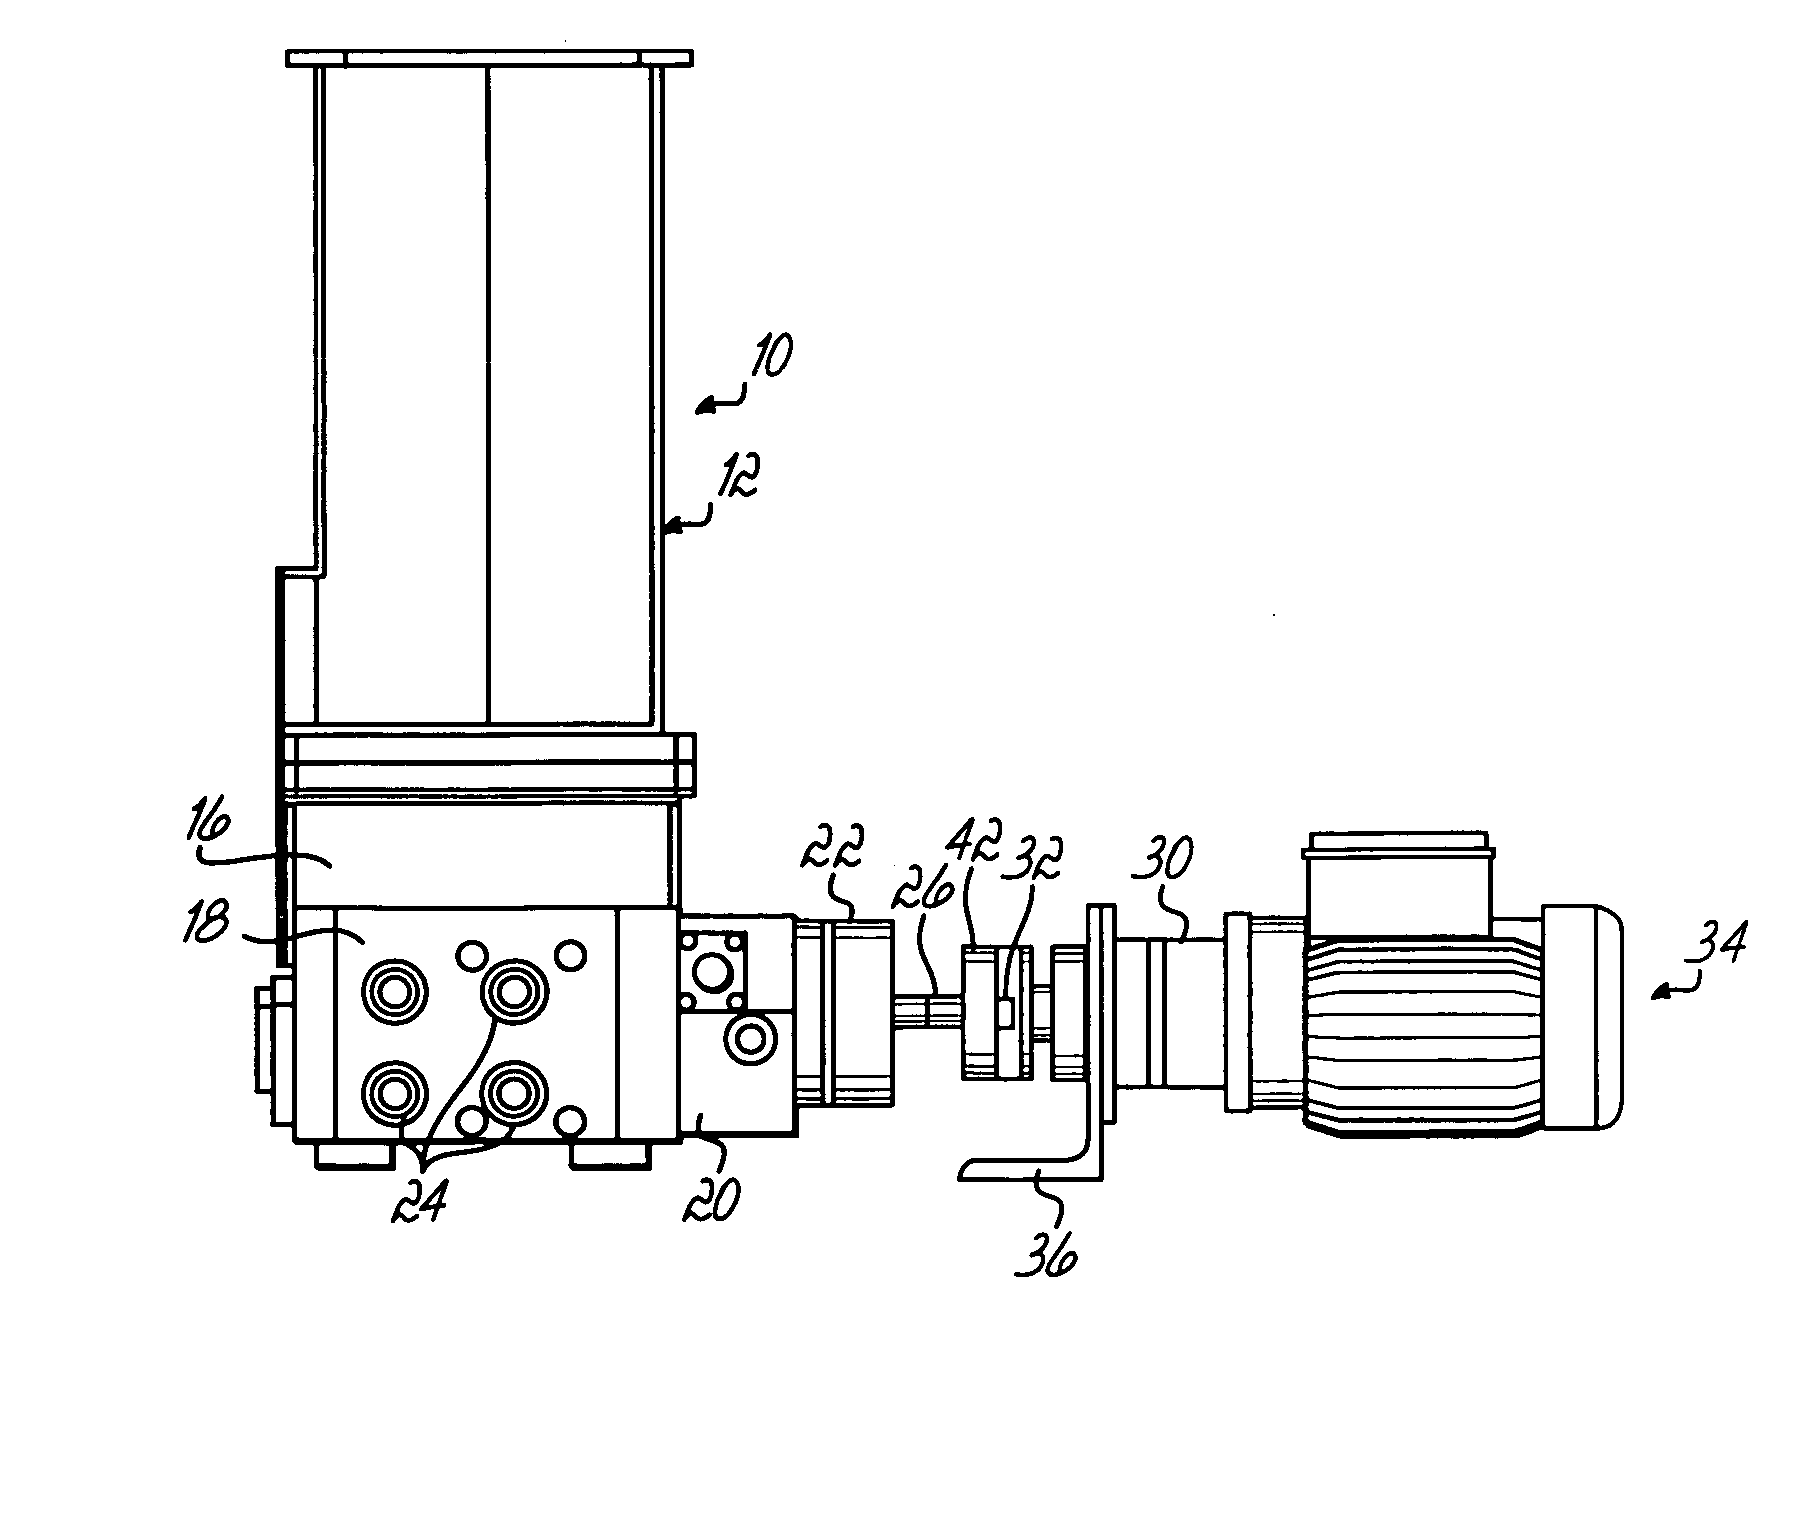 Apparatus for dispensing free-flowing material